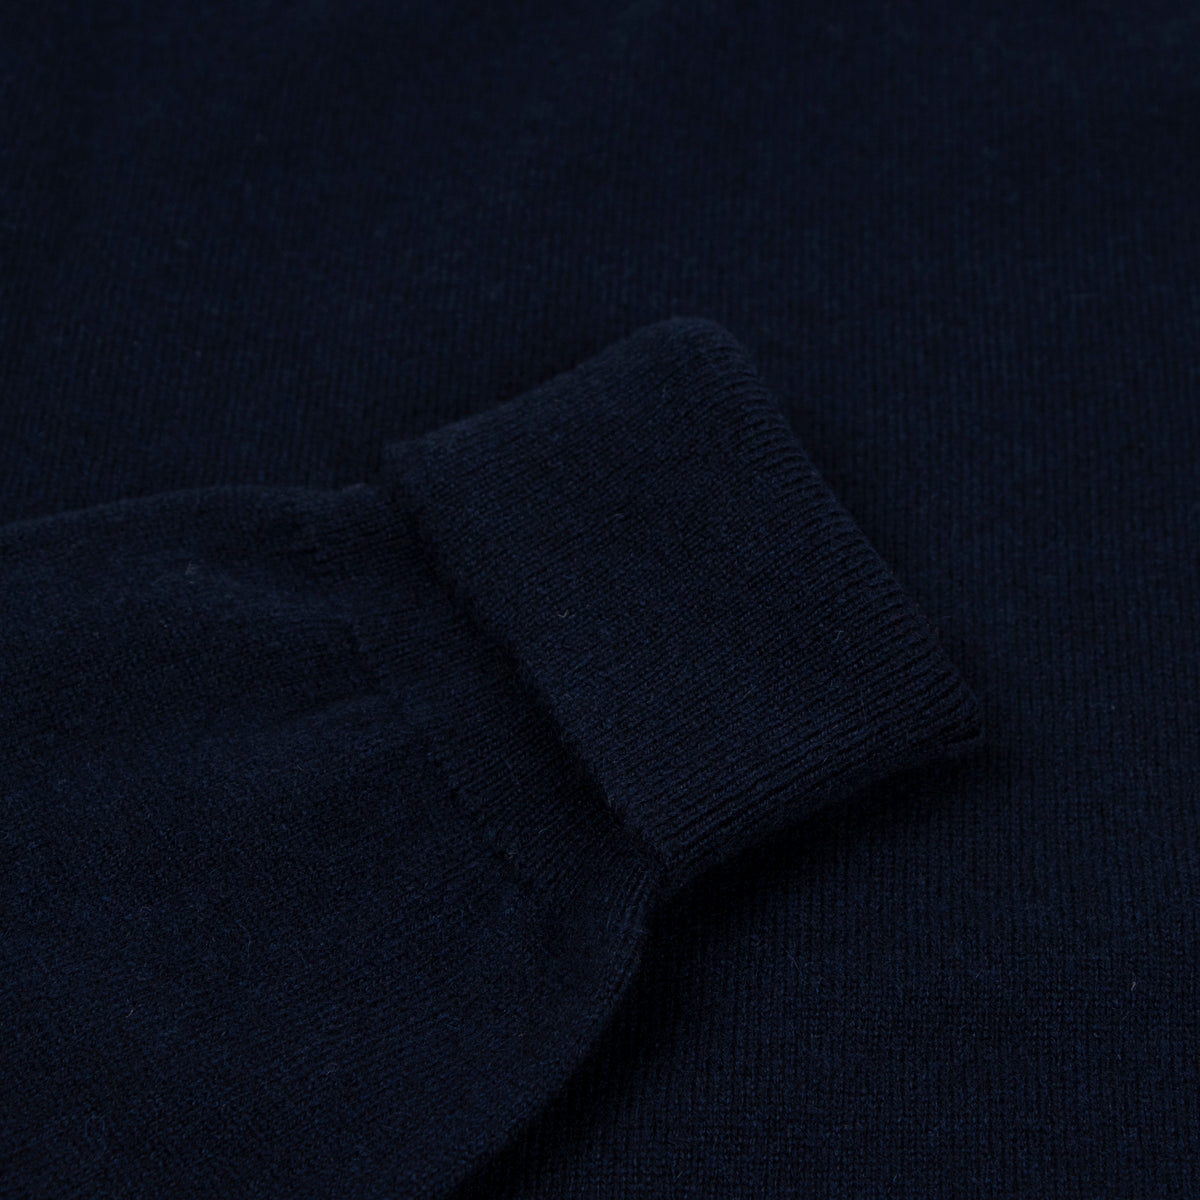 Dark Navy Chatsworth 2ply V-Neck Cashmere Sweater  Robert Old   